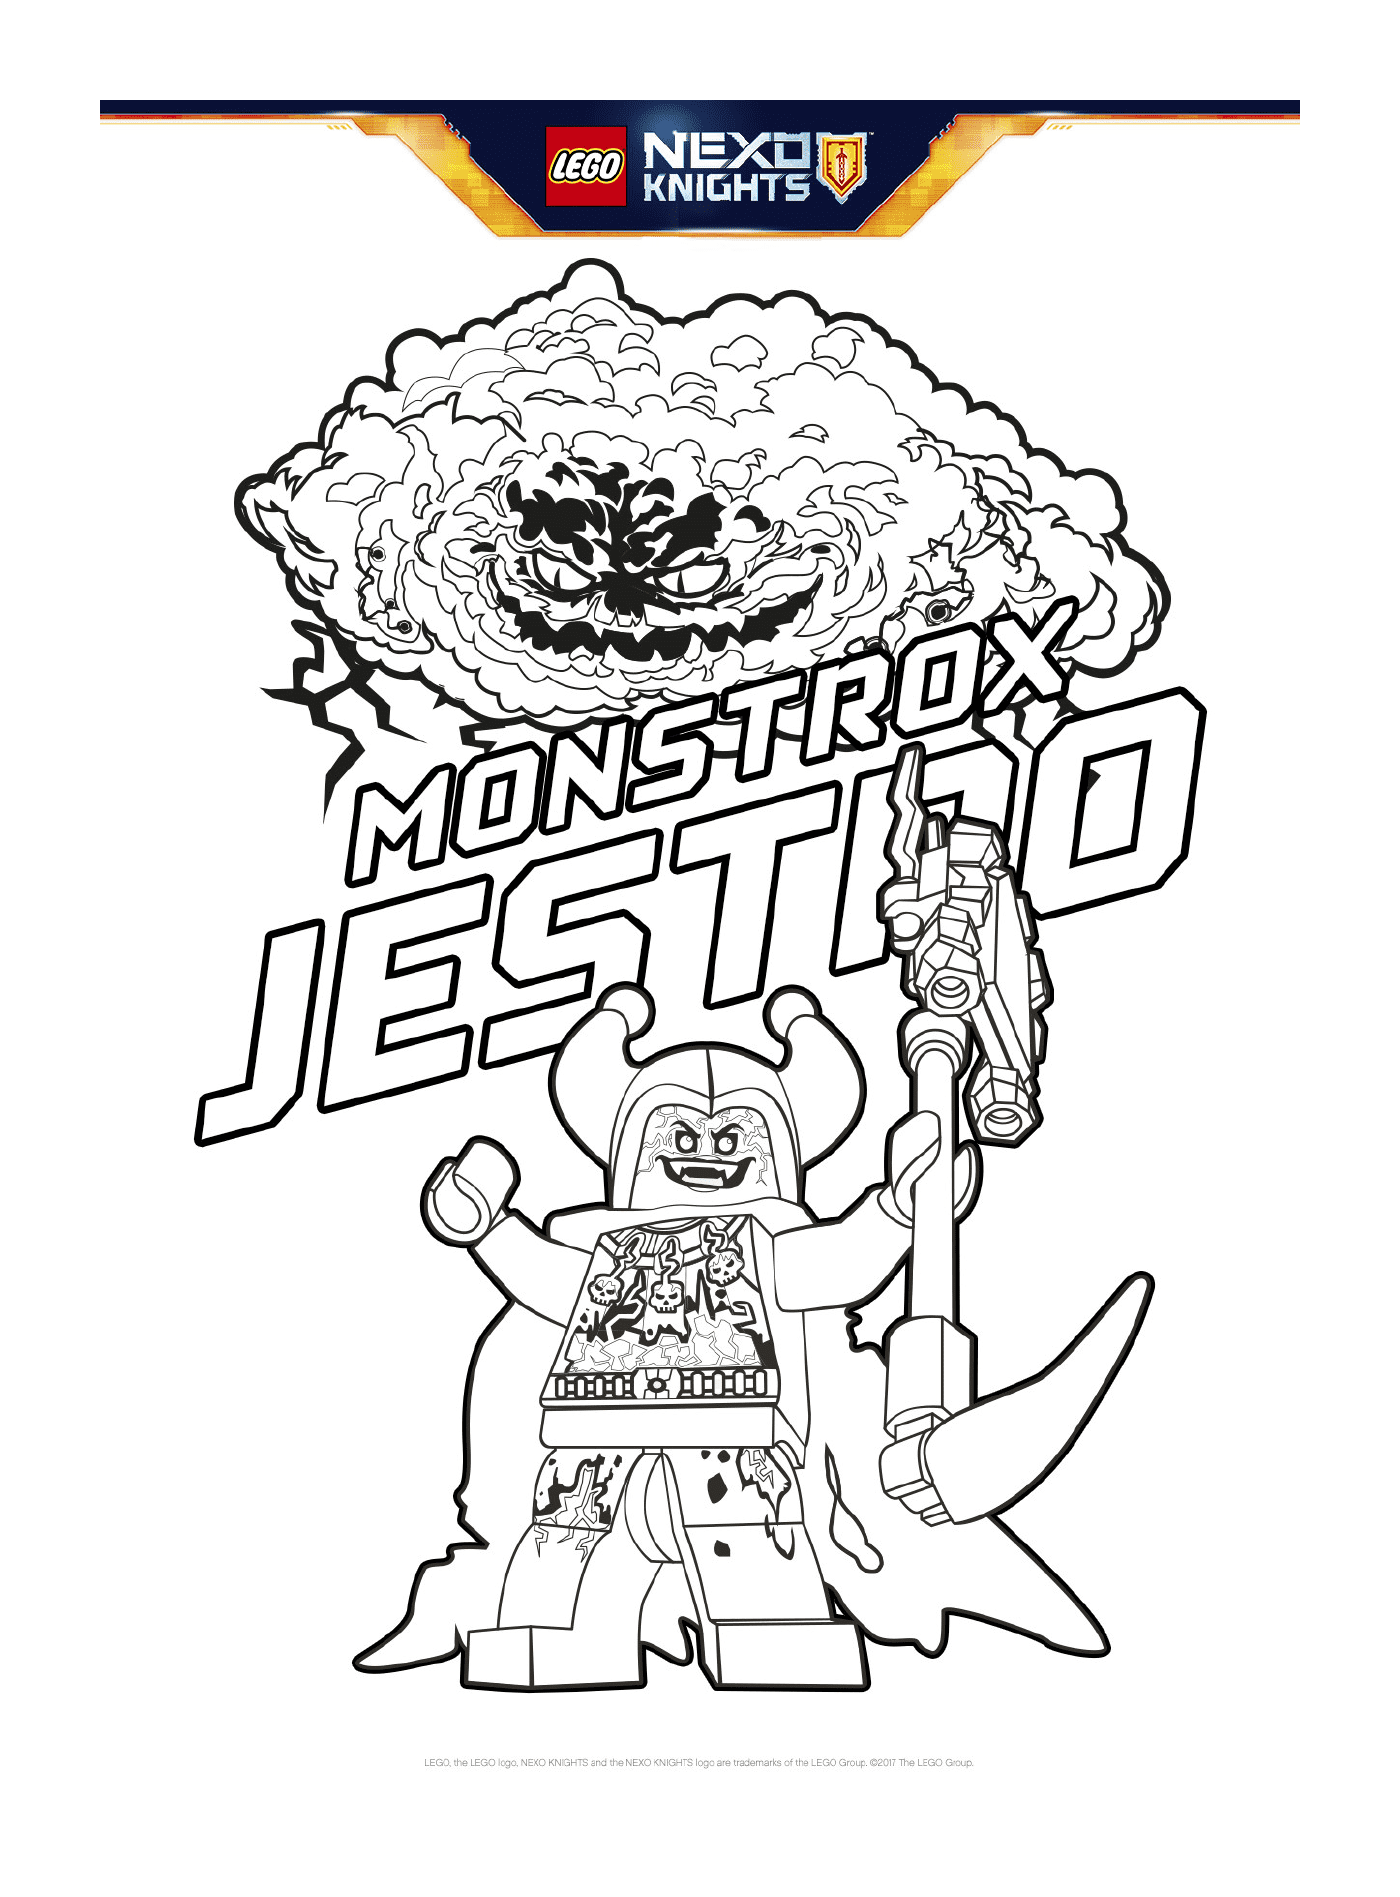  Monstrox Jessro Nexo Knights LEGO 